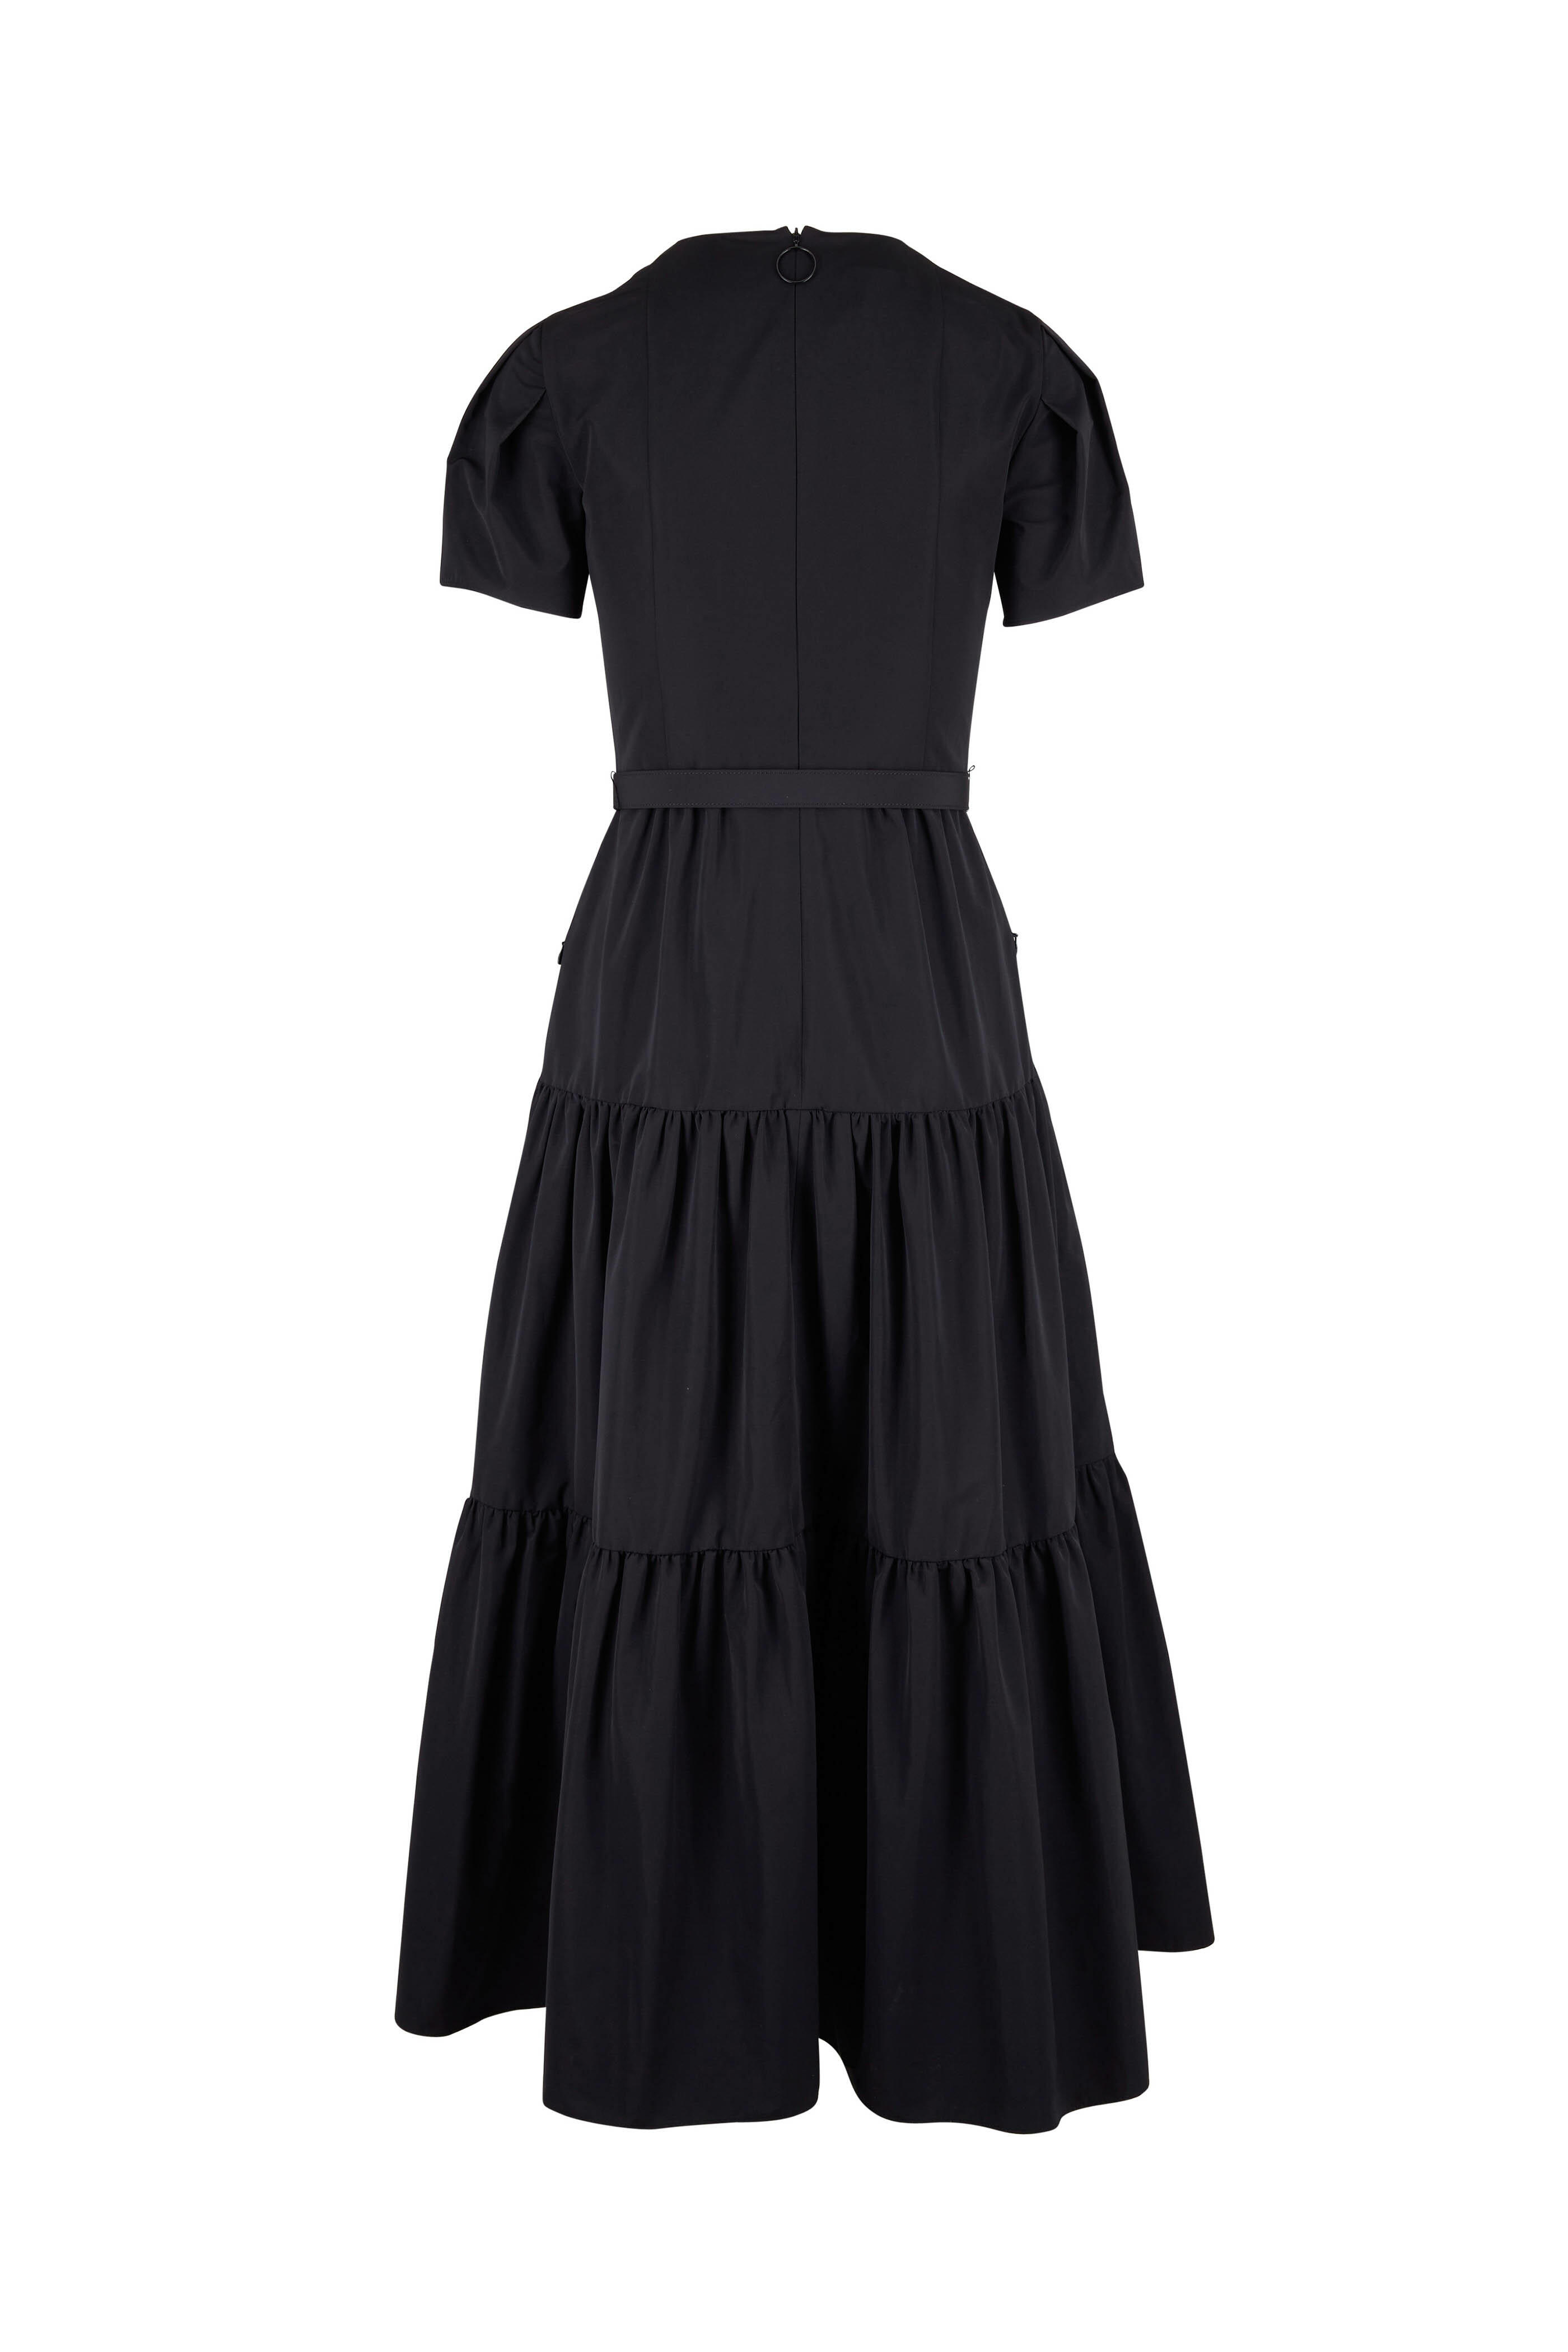 Akris Punto - Black Tiered A-Line Short Sleeve Midi Dress